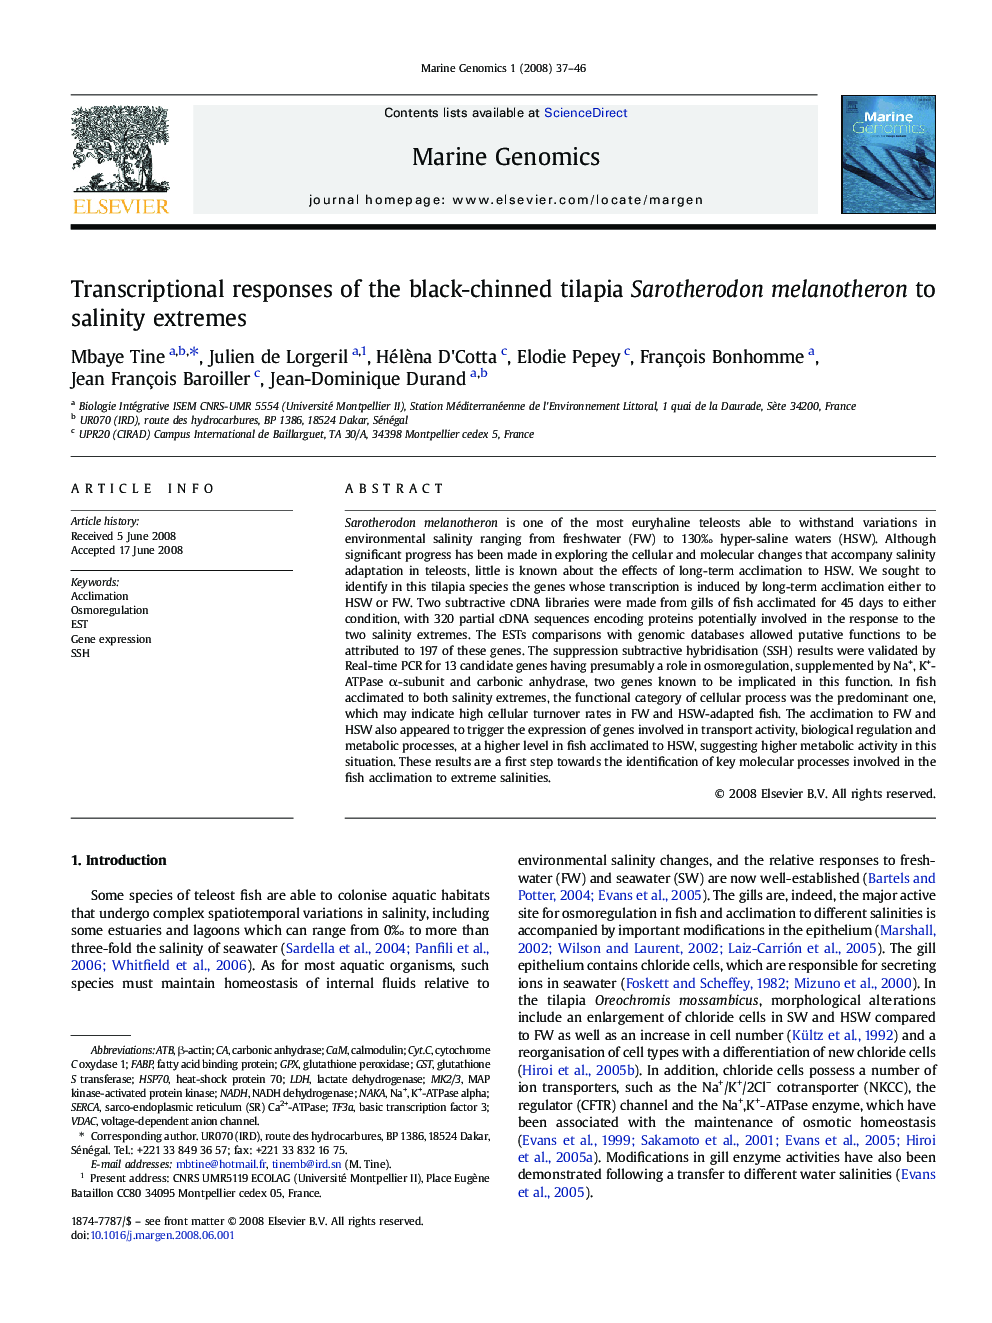 Transcriptional responses of the black-chinned tilapia Sarotherodon melanotheron to salinity extremes